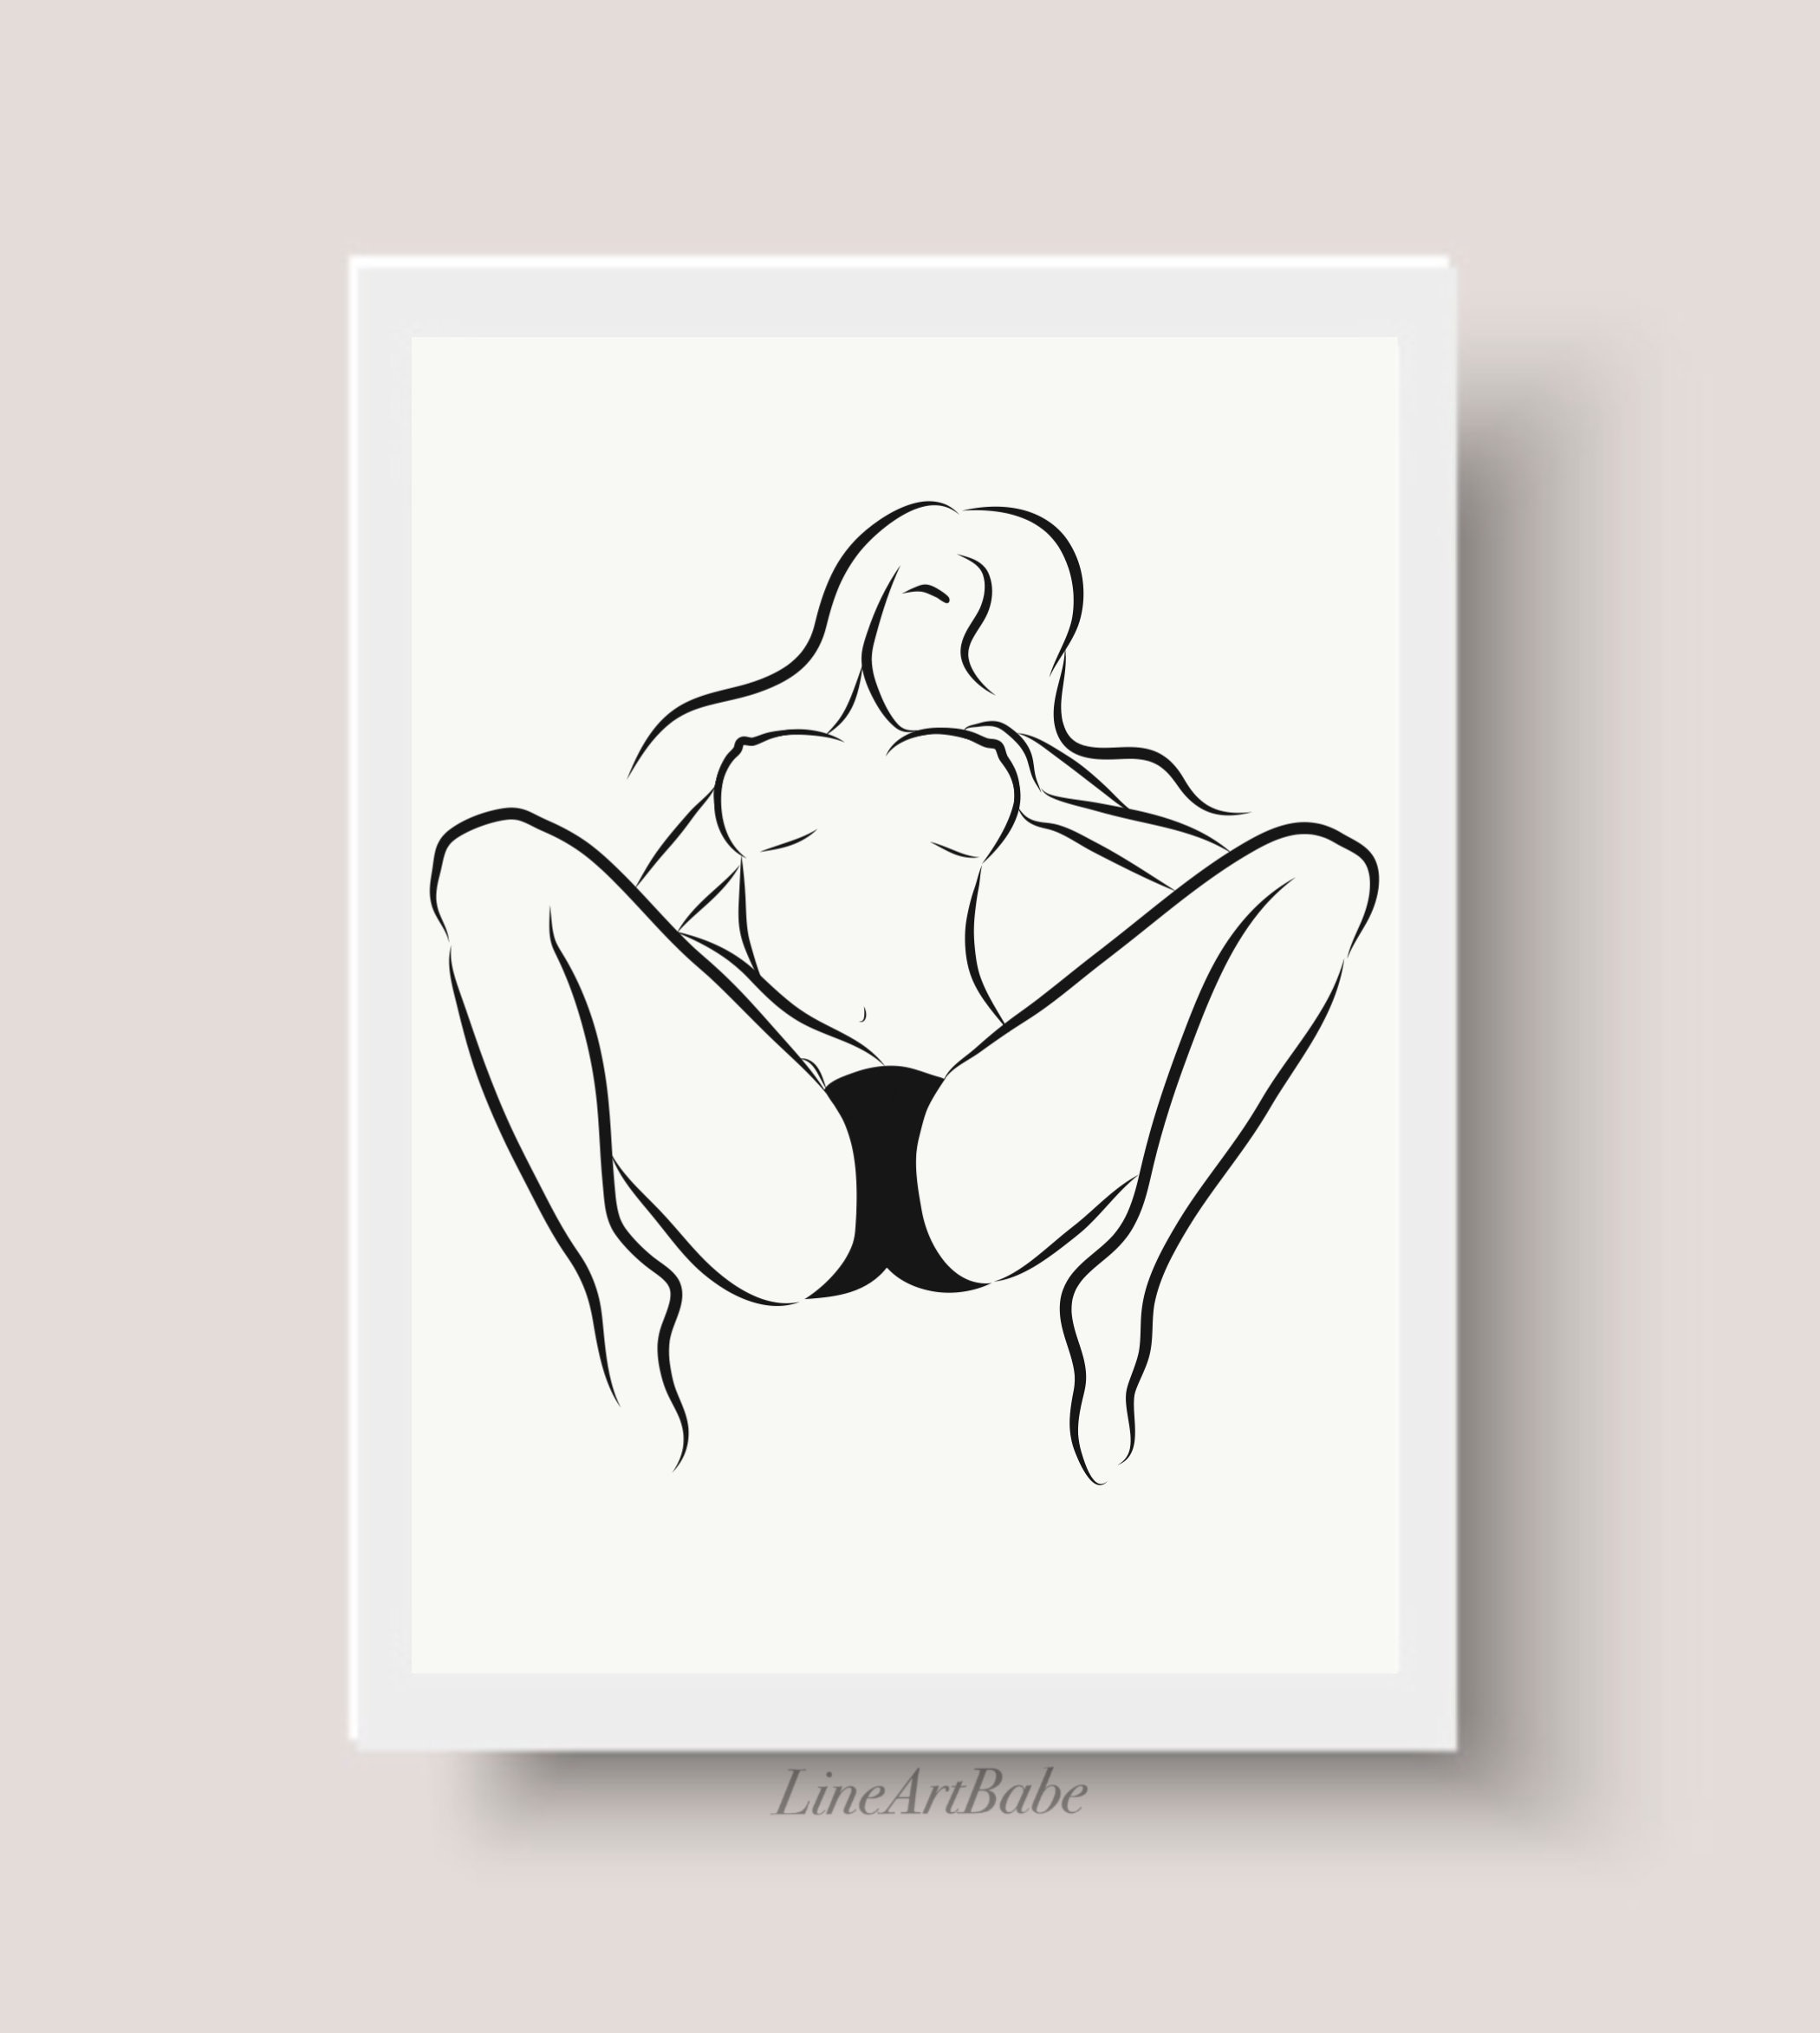 Sexy Line Art Print Woman Touching Herself Drawing